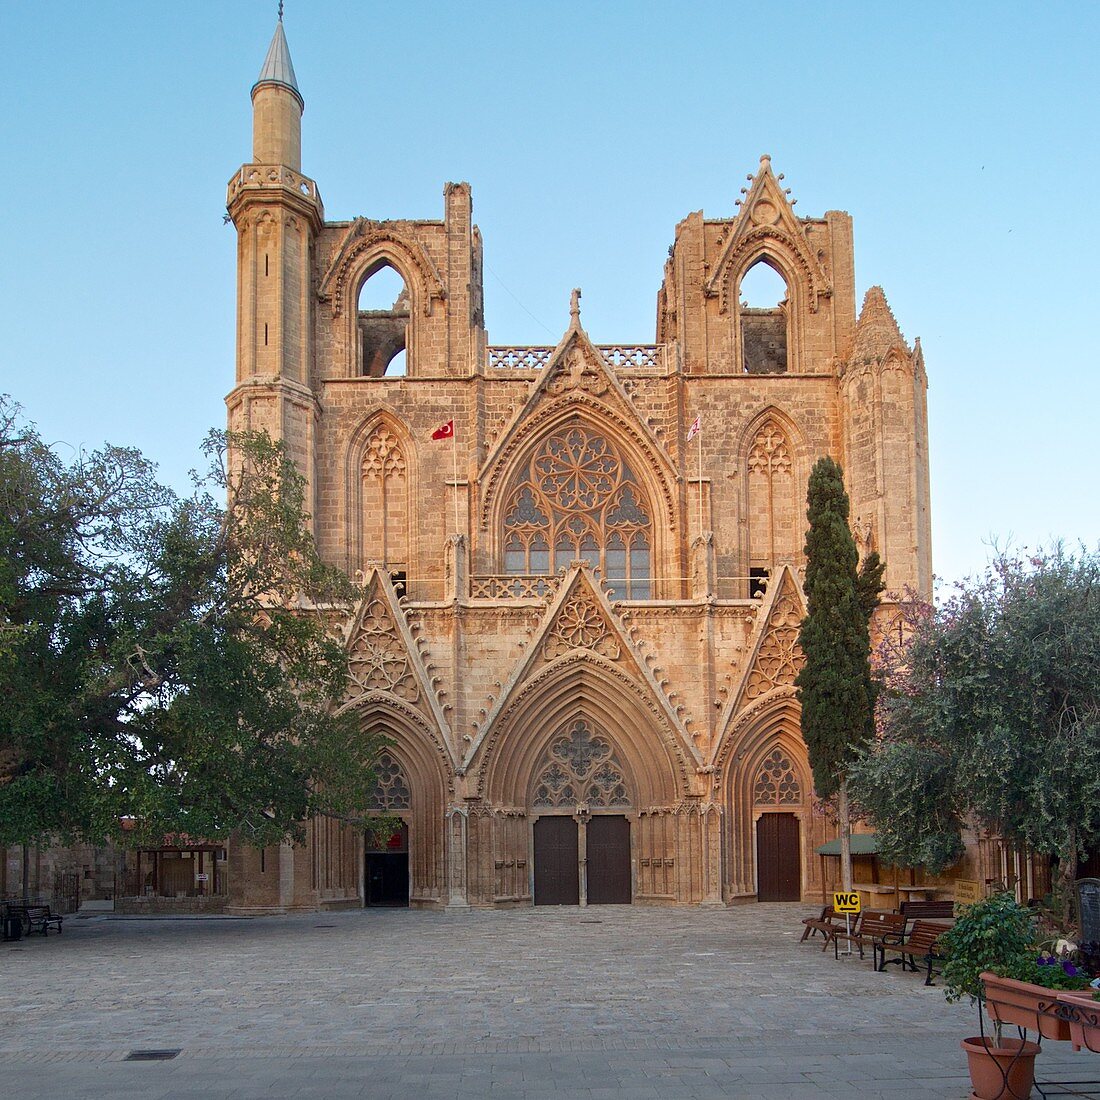 St. Nicholas Cathedral, today Lala Mustafa Pa?a Camii, Famagusta, Gazimagusa